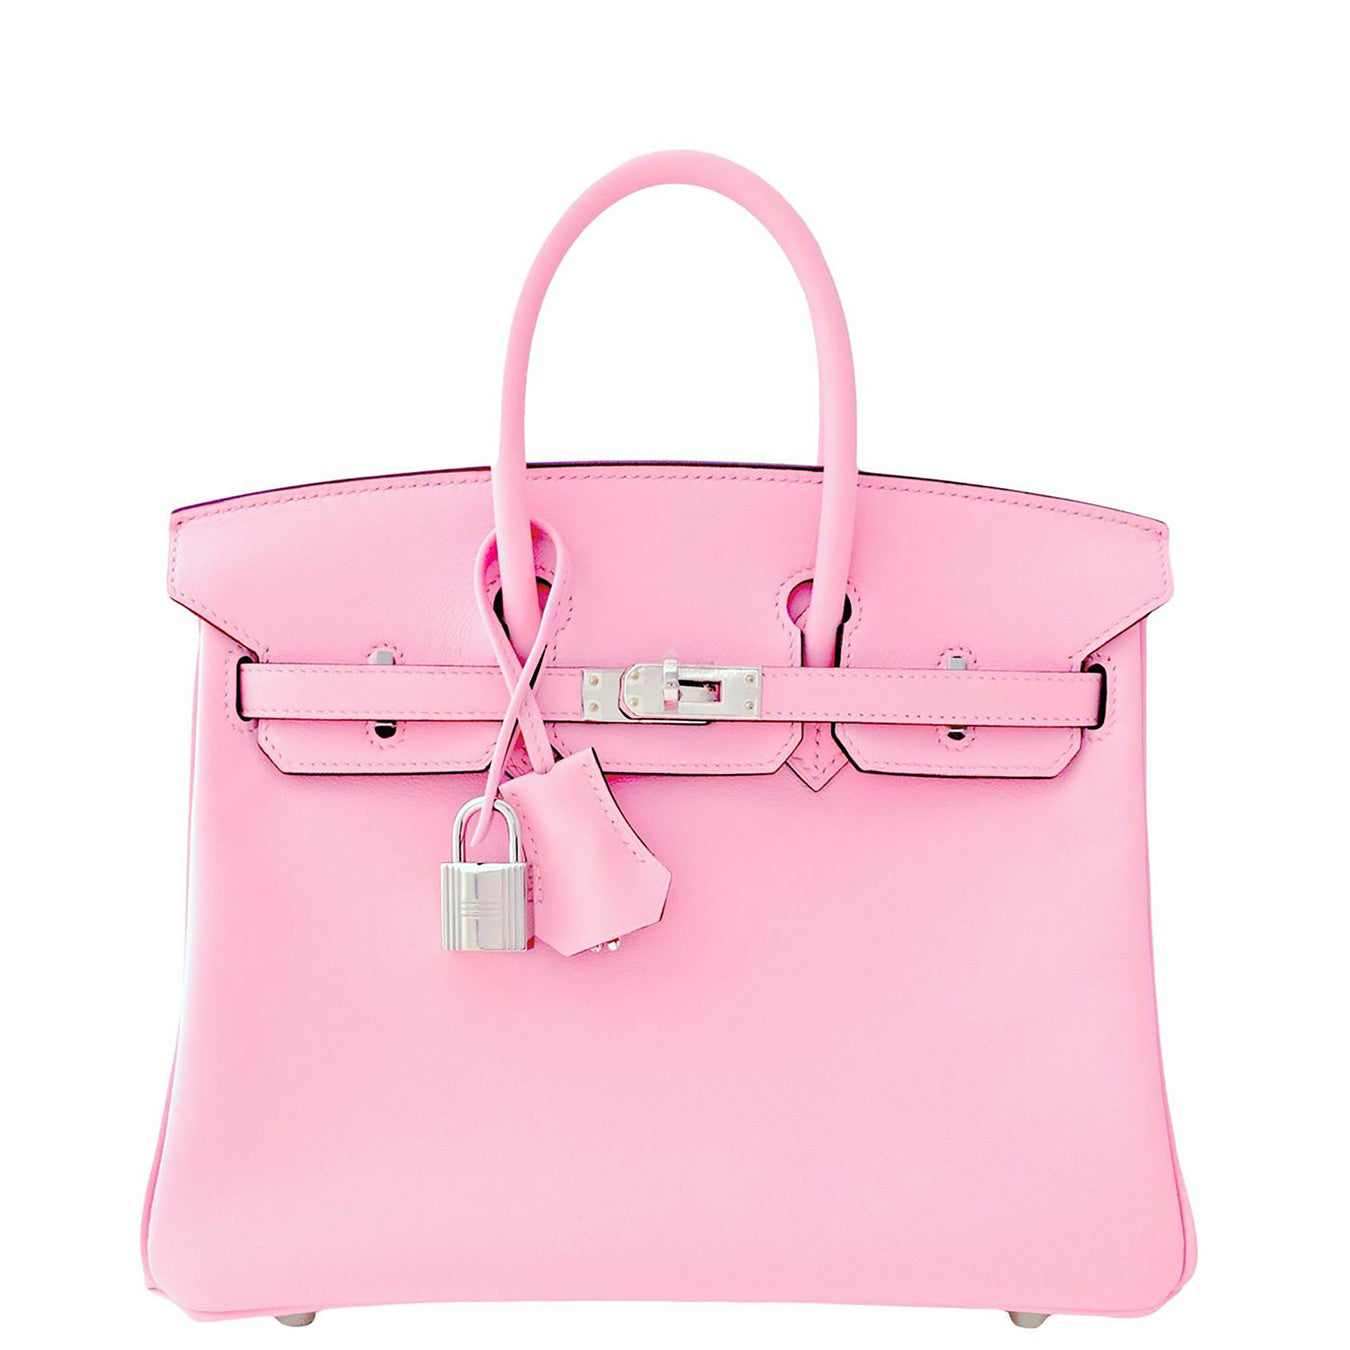 Hermes Rose Sakura Pink 25cm Swift Leather Birkin Satchel Bag Jewel ...